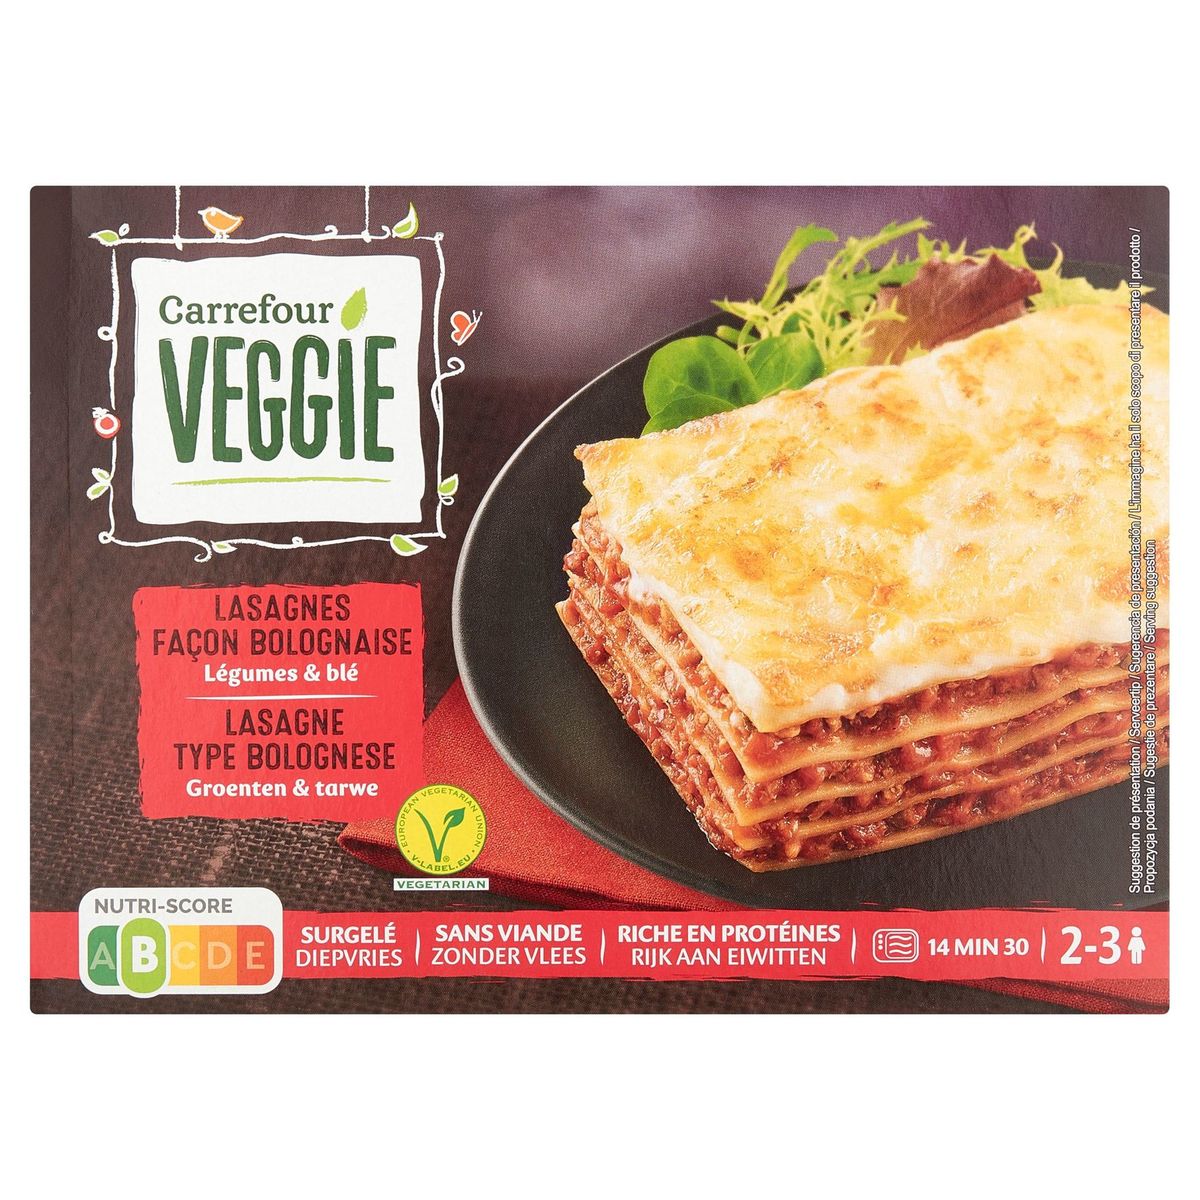 Carrefour Veggie Lasagne Type Bolognese Groenten & Tarwe 600 g